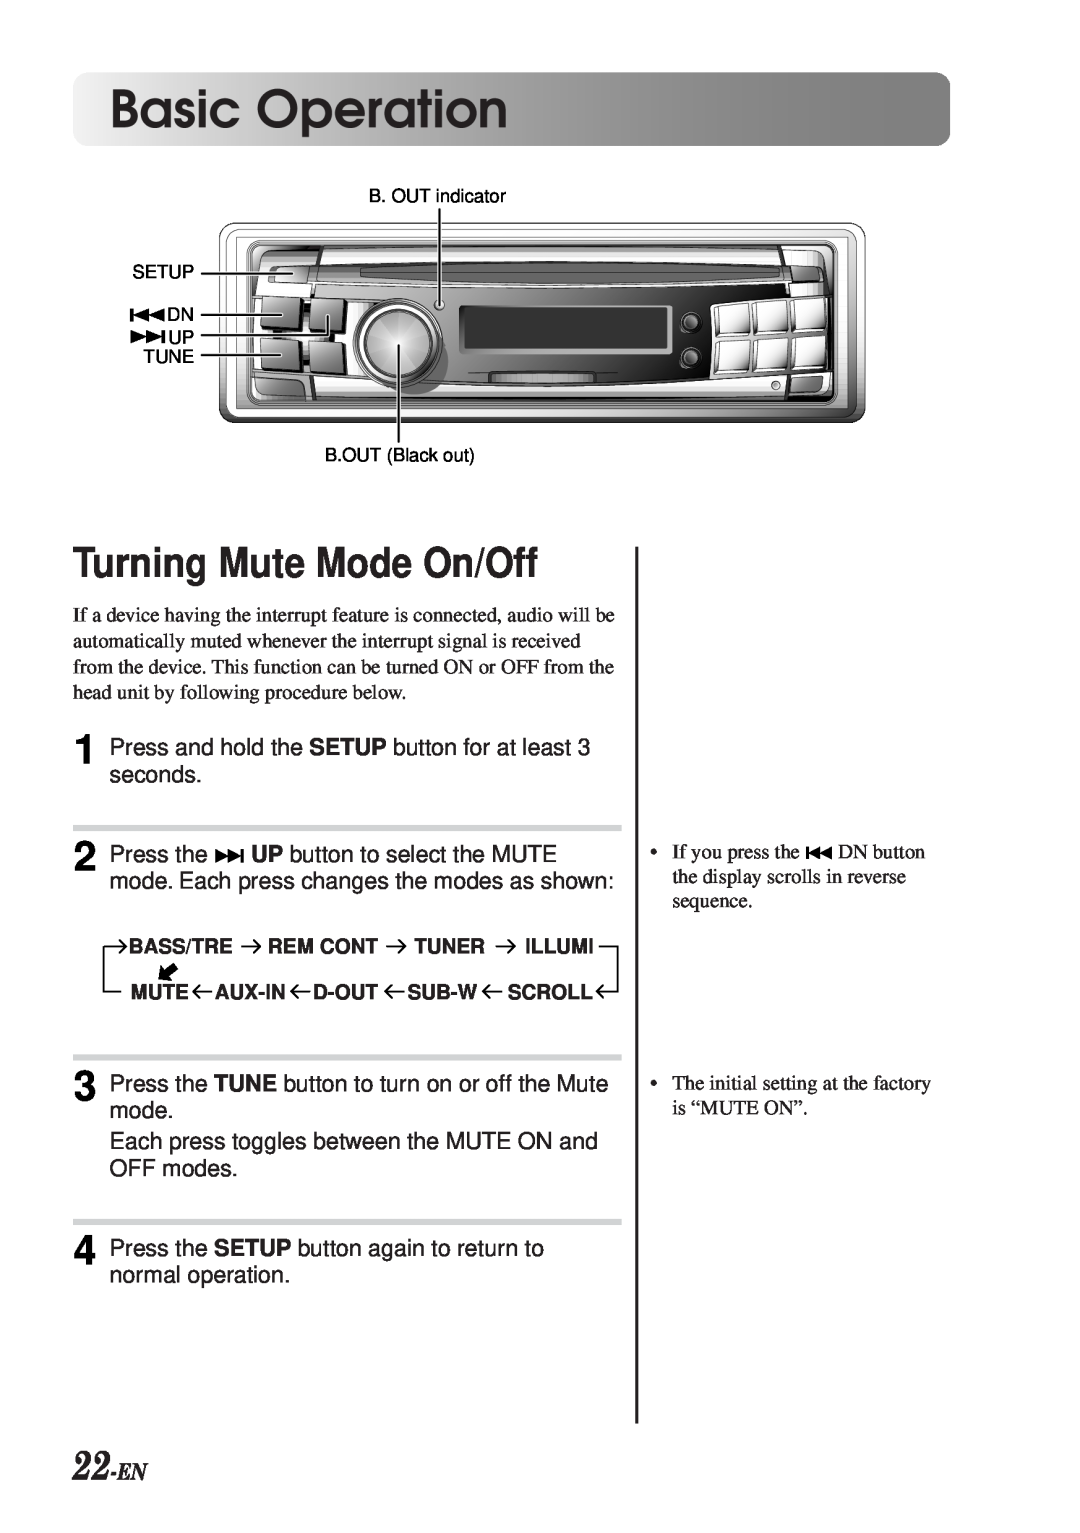 Alpine CDA-7990 manual Turning Mute Mode On/Off, 22-EN, Basic Operation 